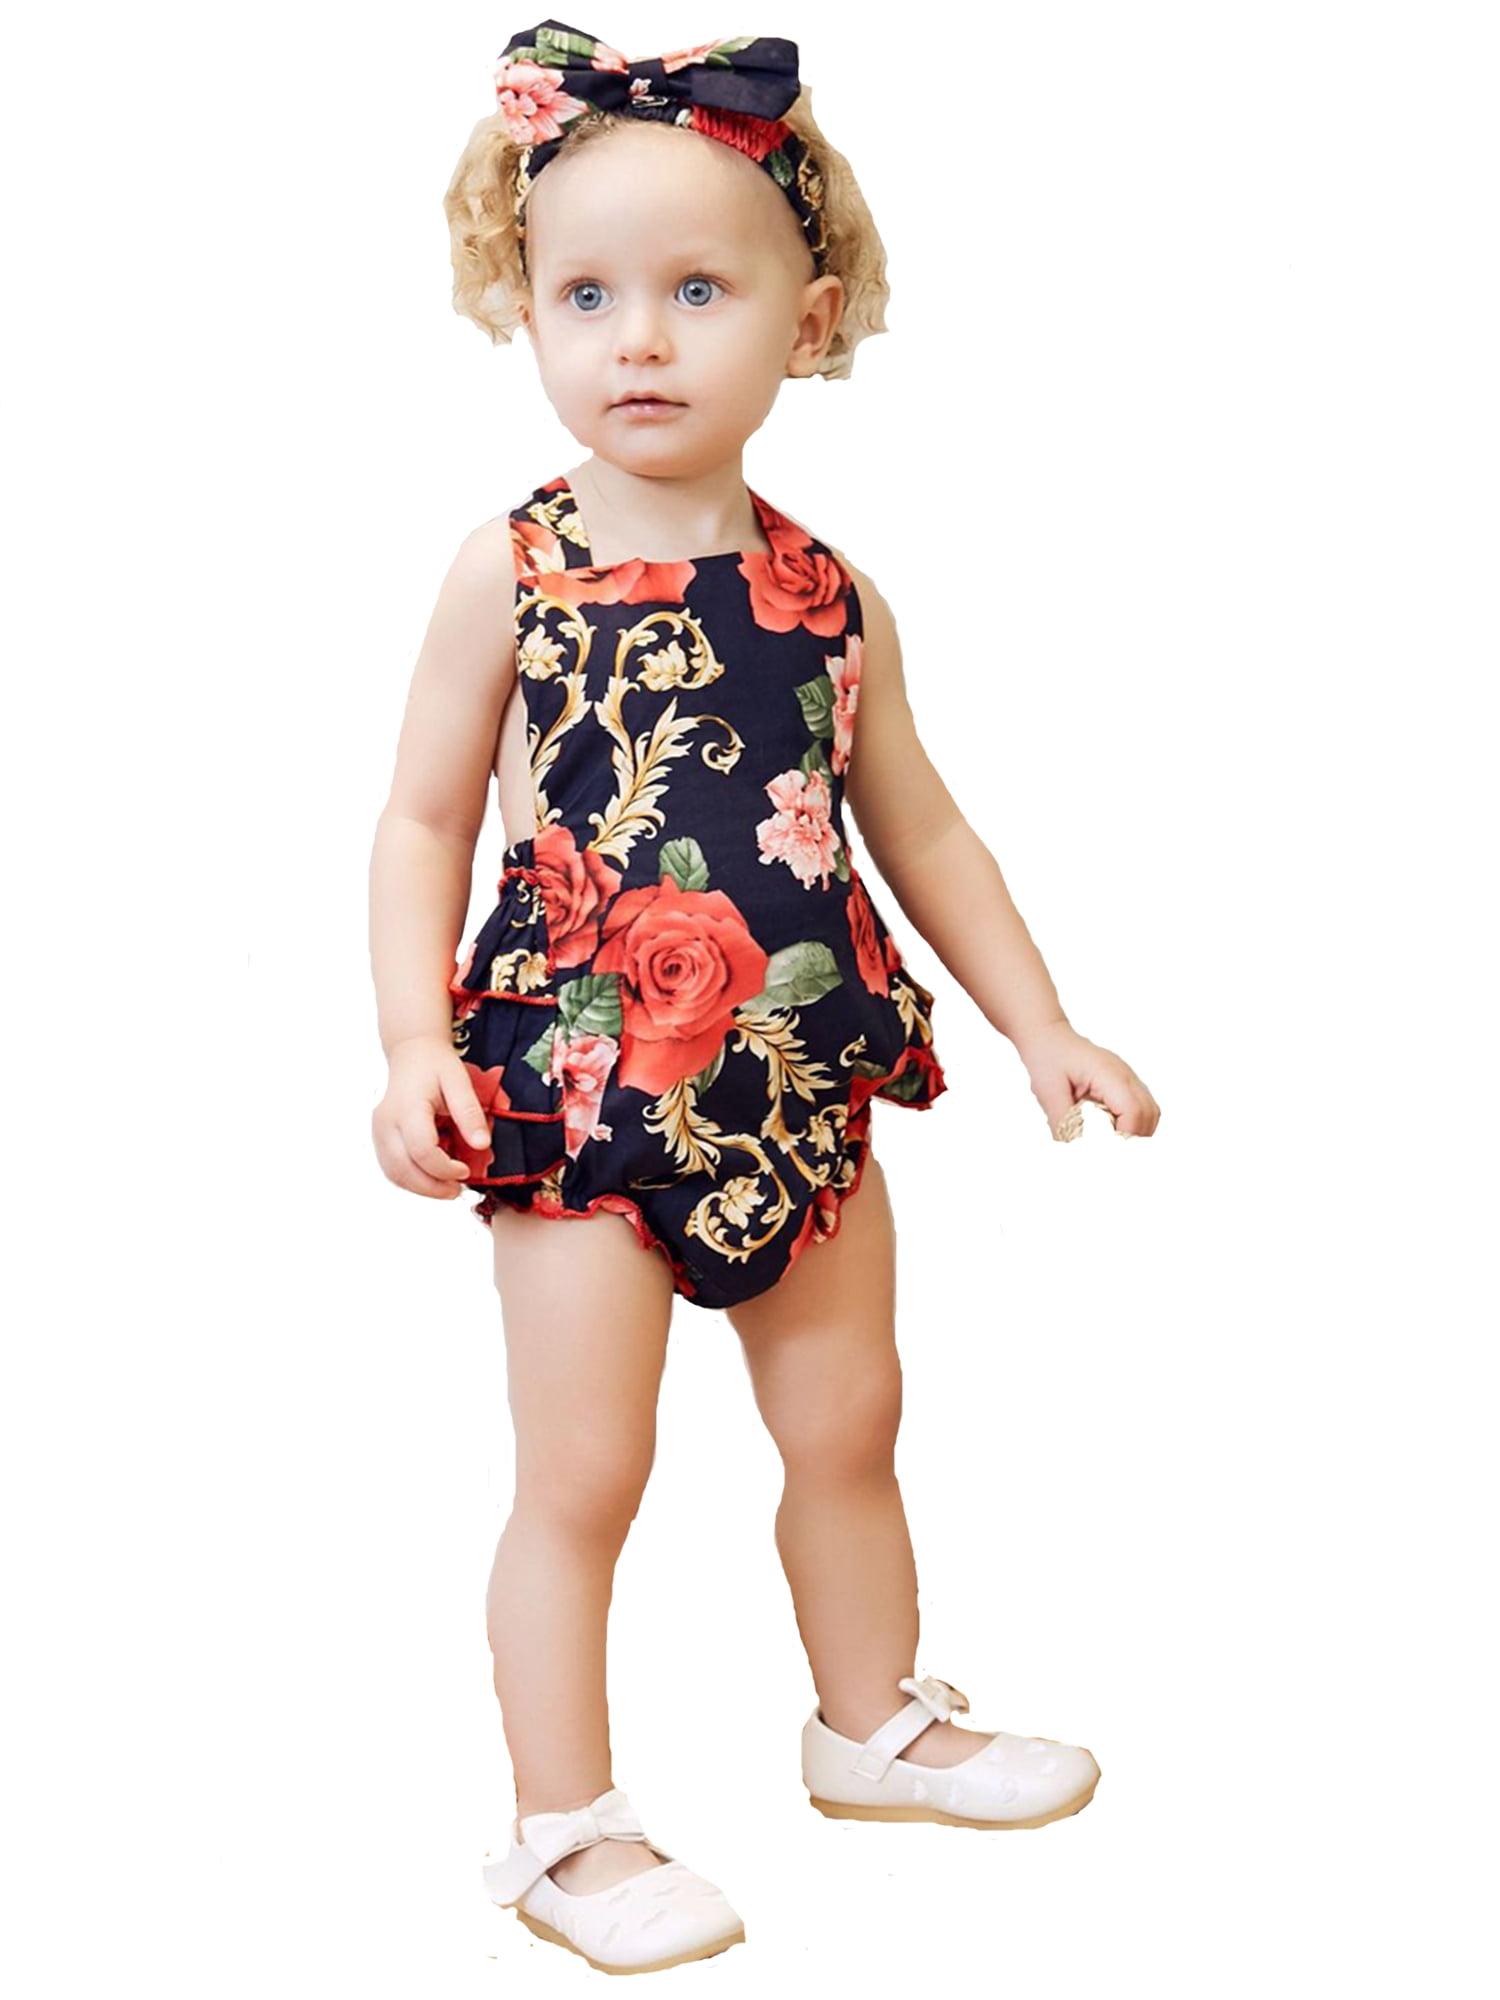 Toddler Newborn Baby Girl Floral Romper Bodysuit Jumpsuit Outfit Sunsuit Clothes 